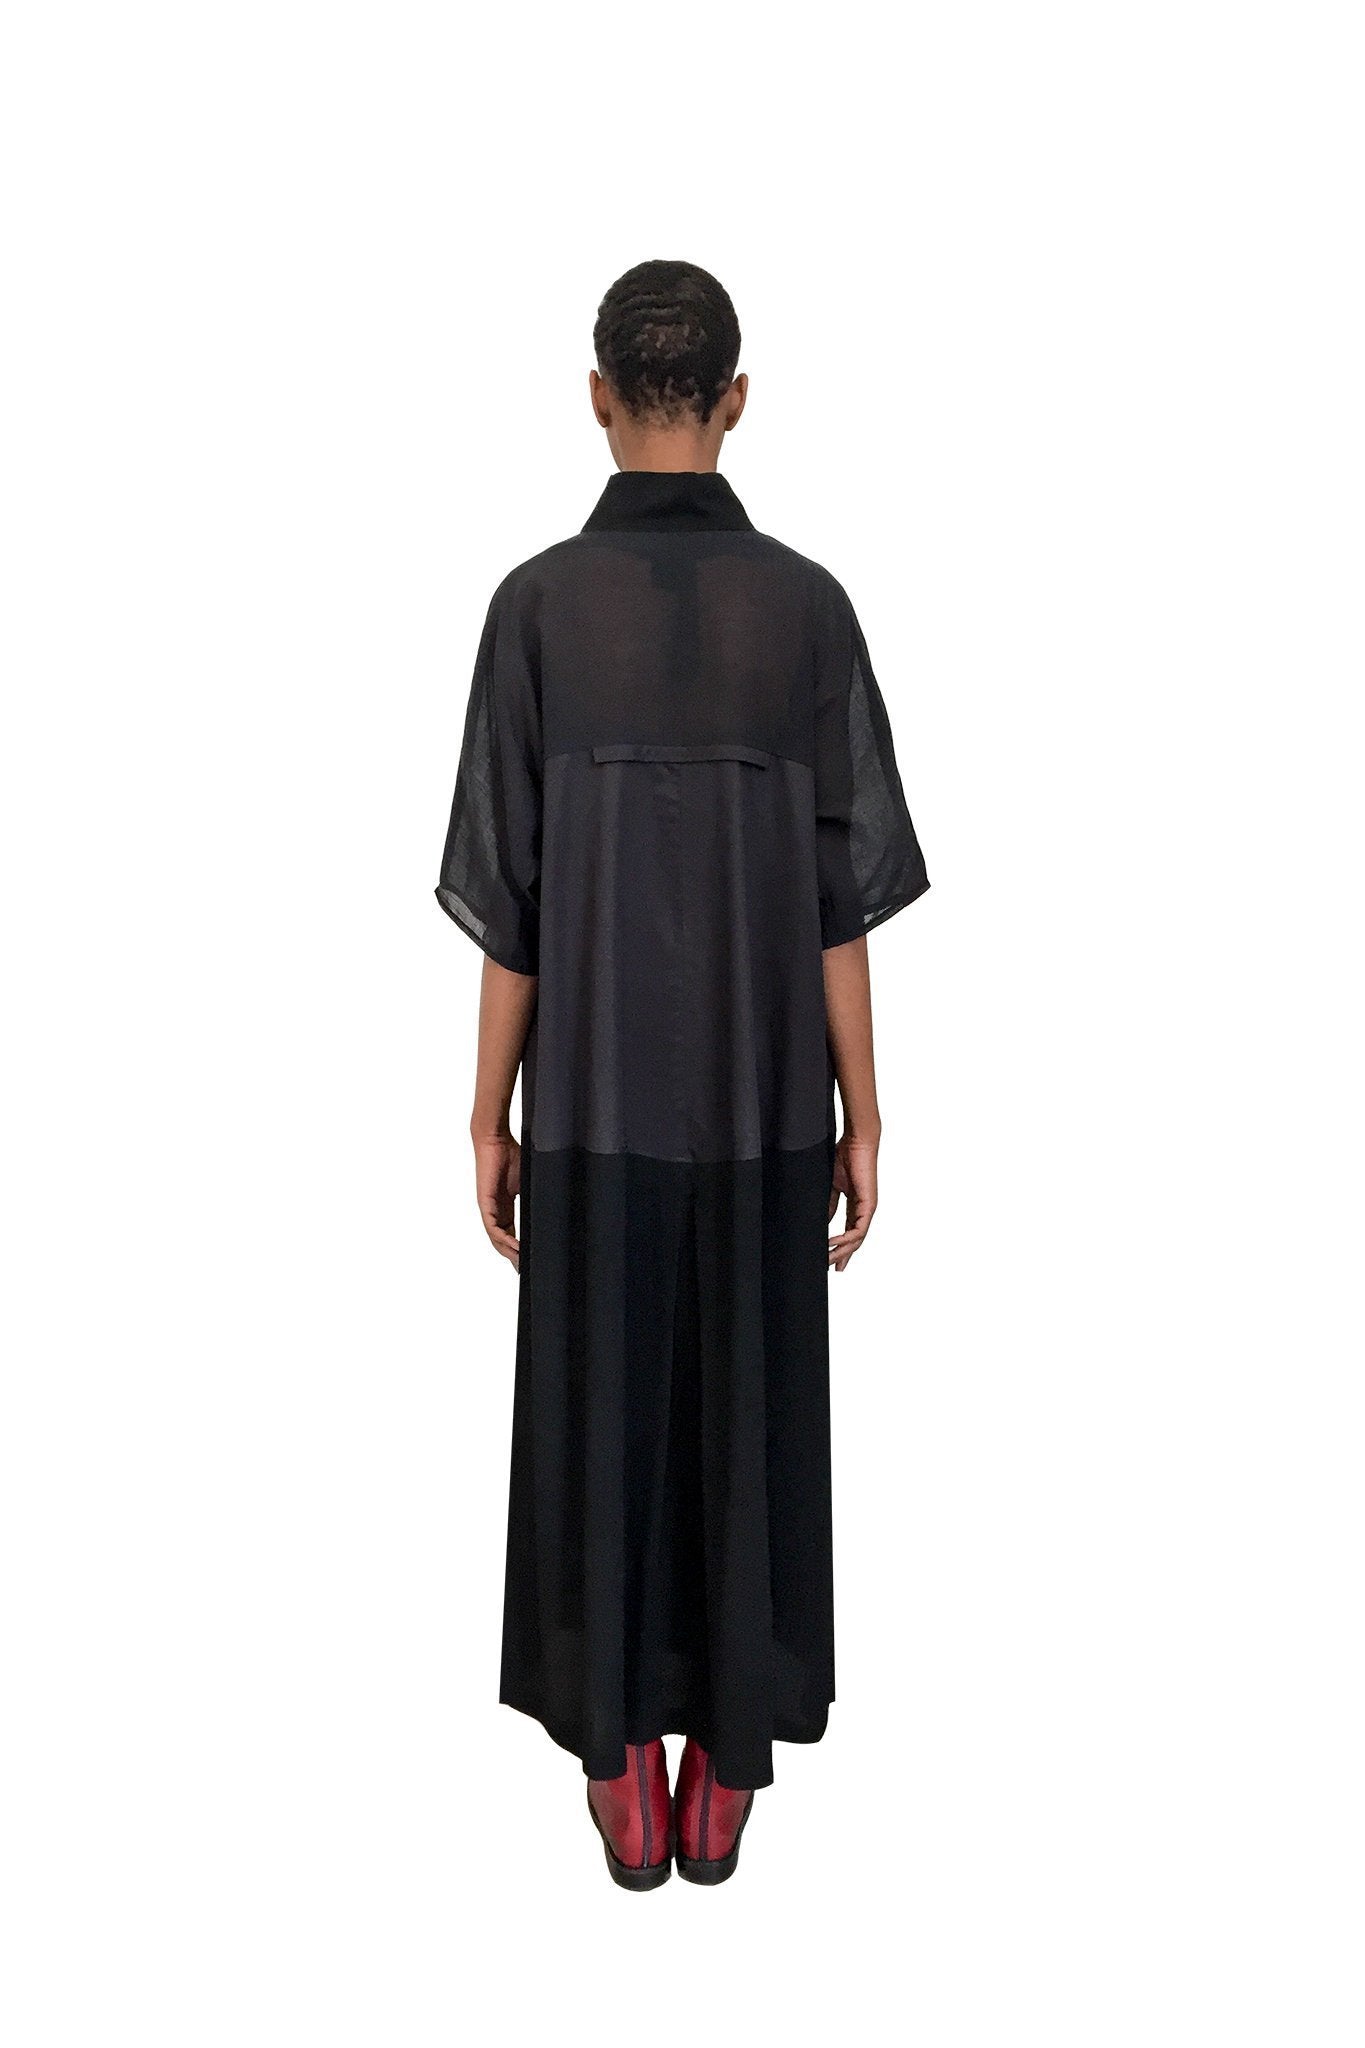 Osaka Robe I Black Sheer